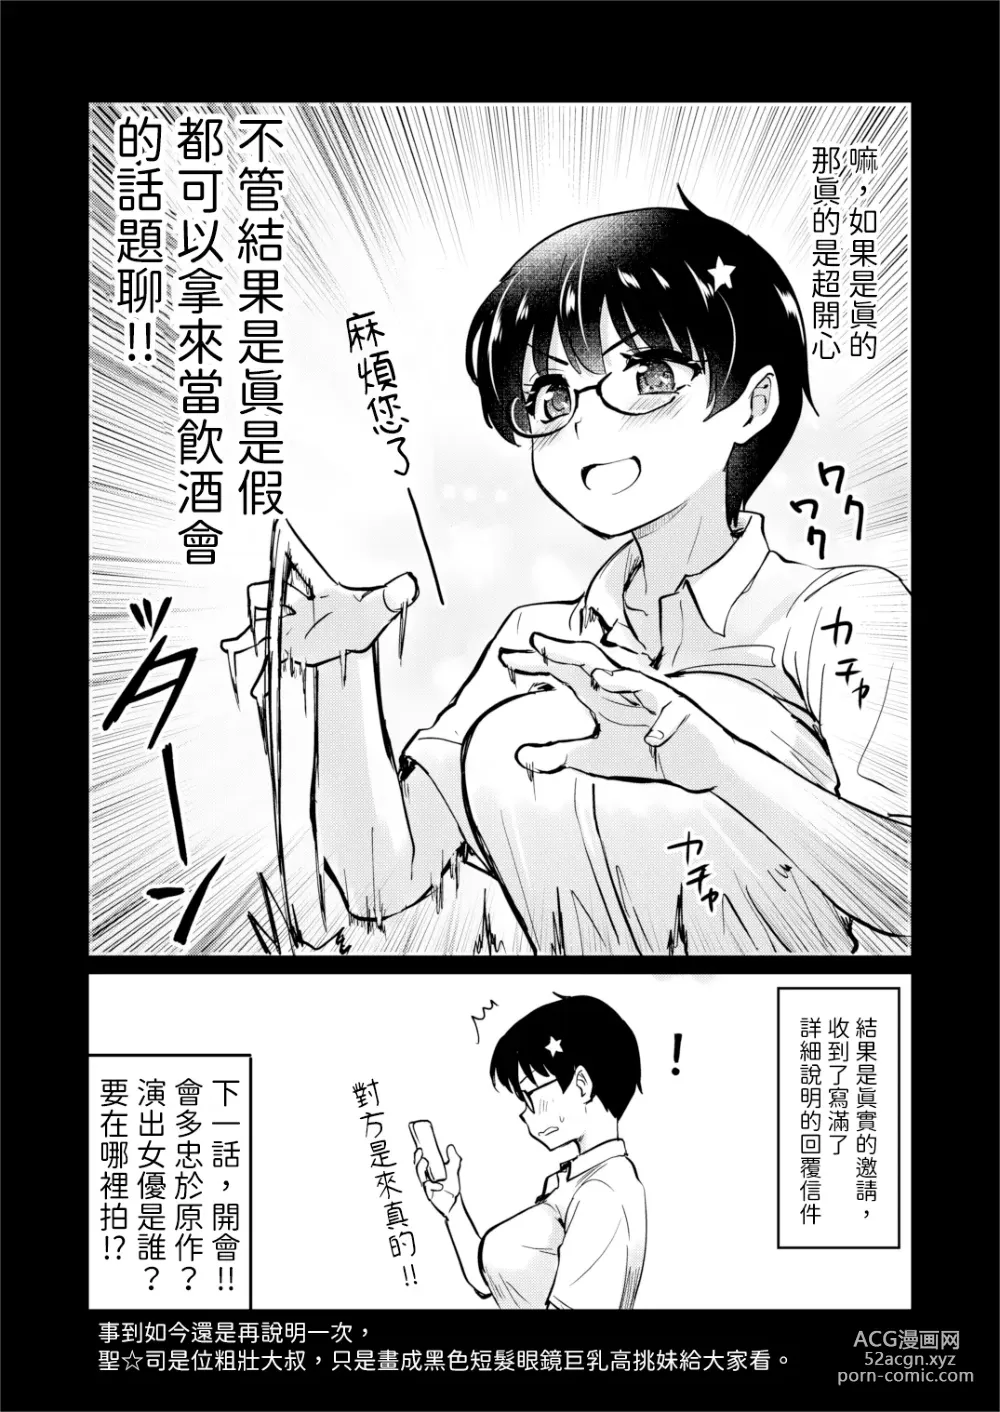 Page 8 of doujinshi 我畫的色情漫畫被AV真人化了!? 因為機會難得所以去拍攝現場觀摩之後的心得感想